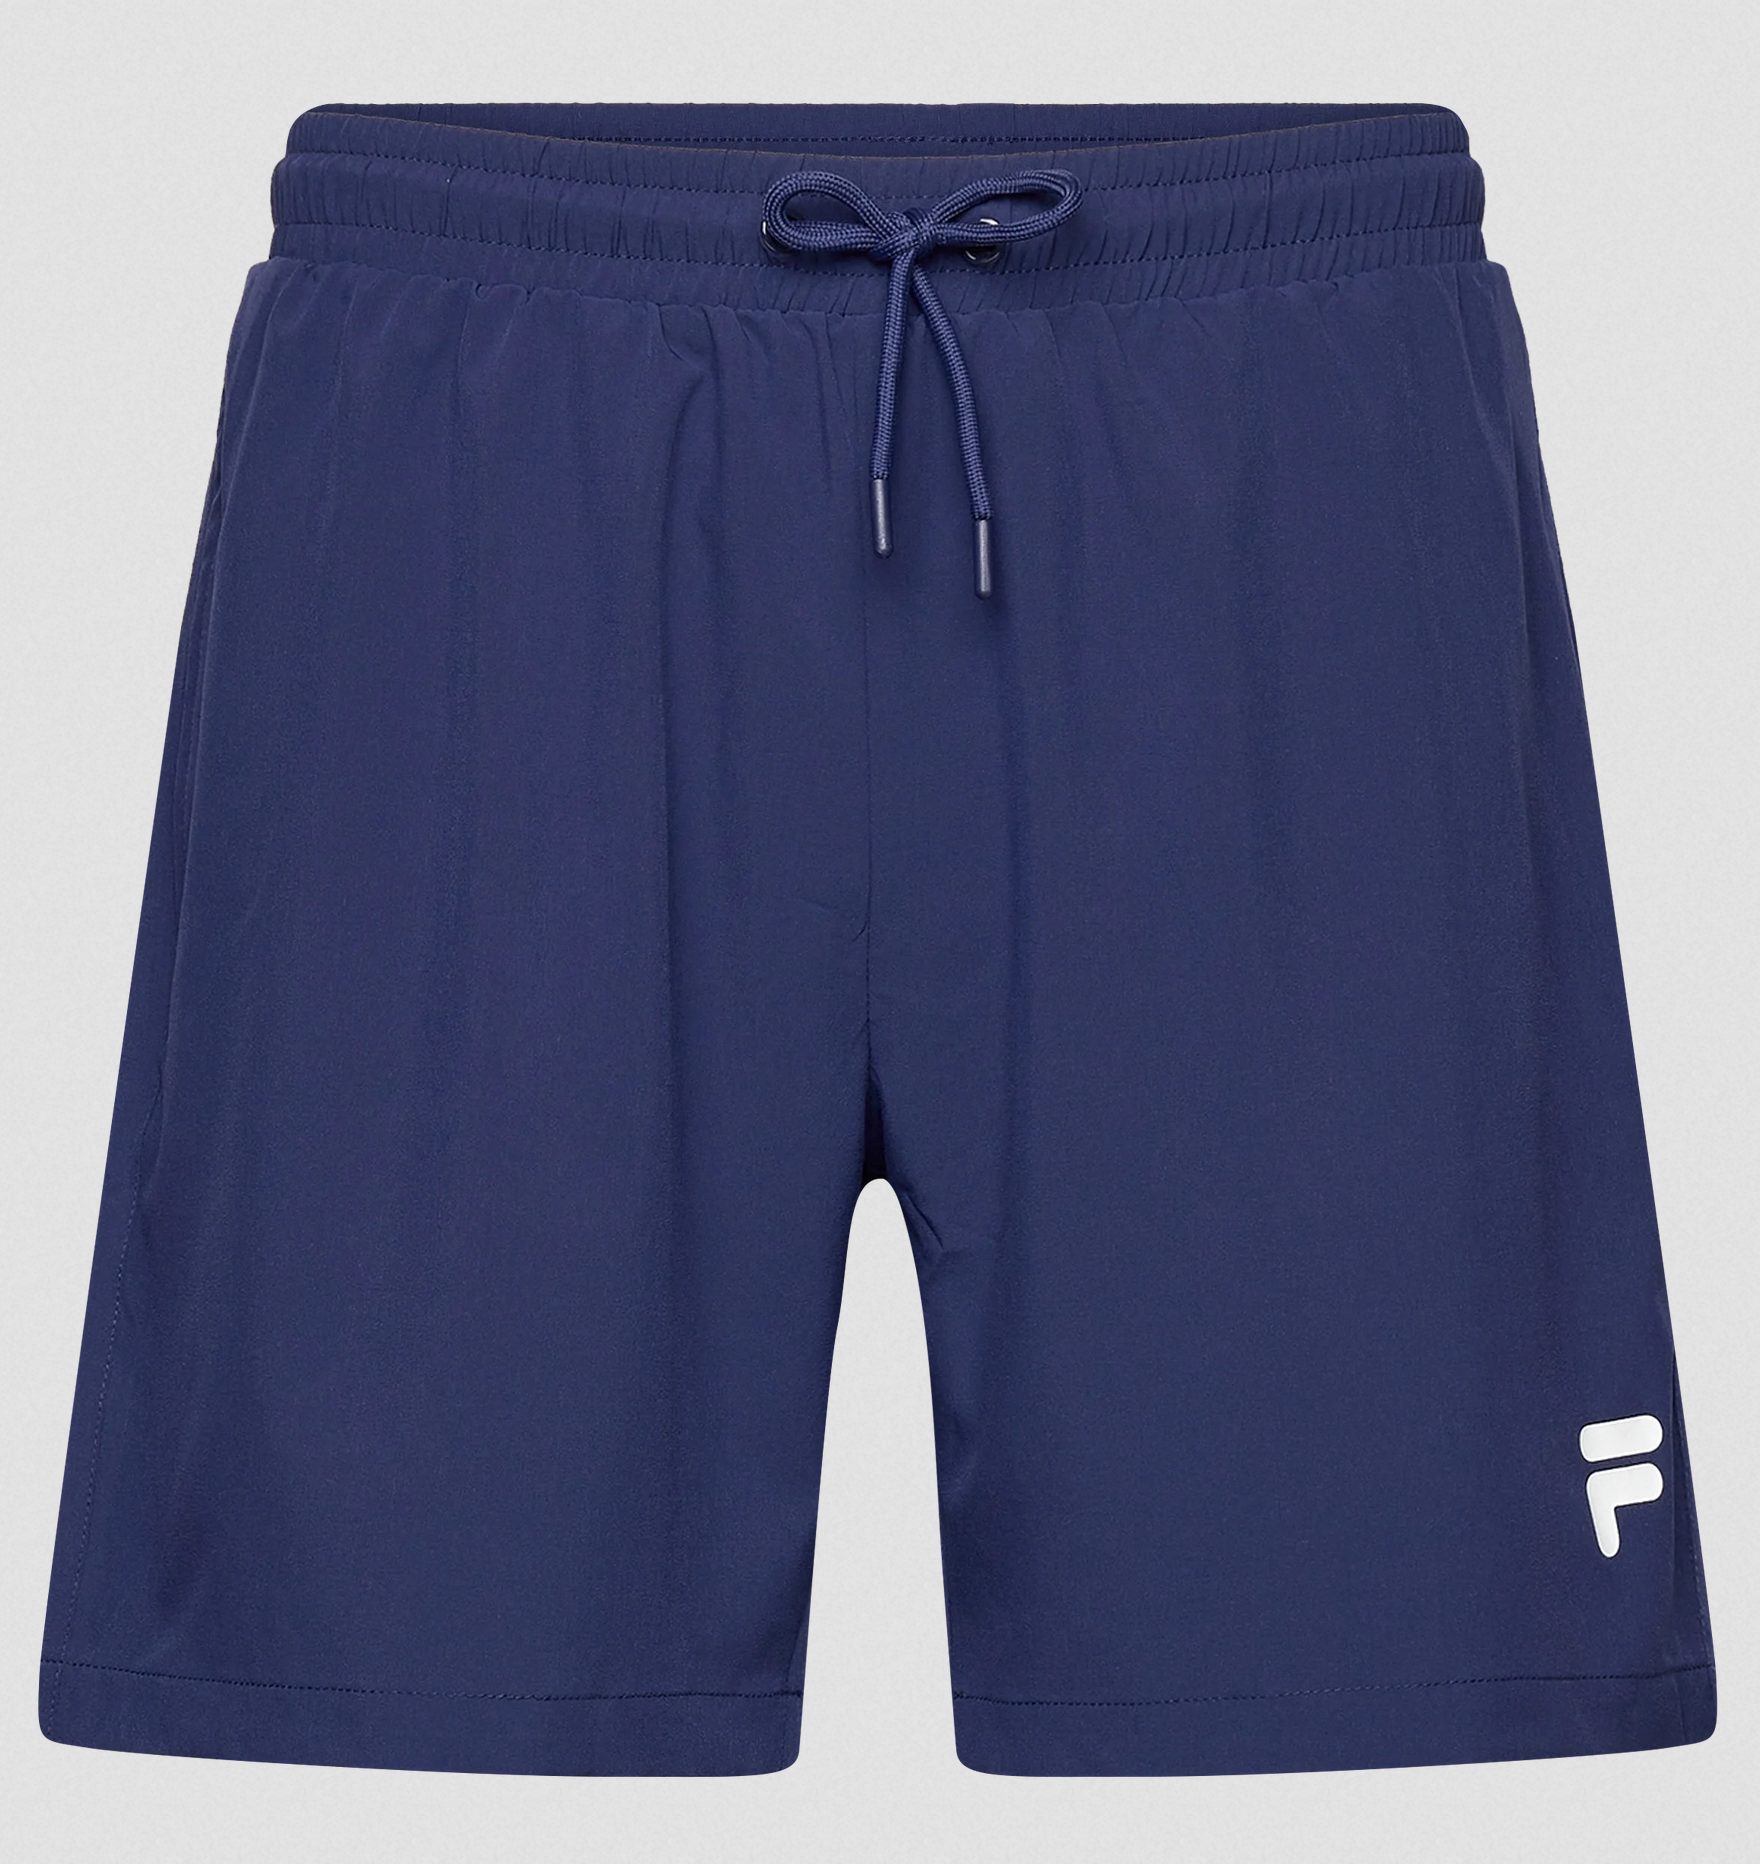 SEZZE Blue Fila shorts Funktionsshorts beach Medieval